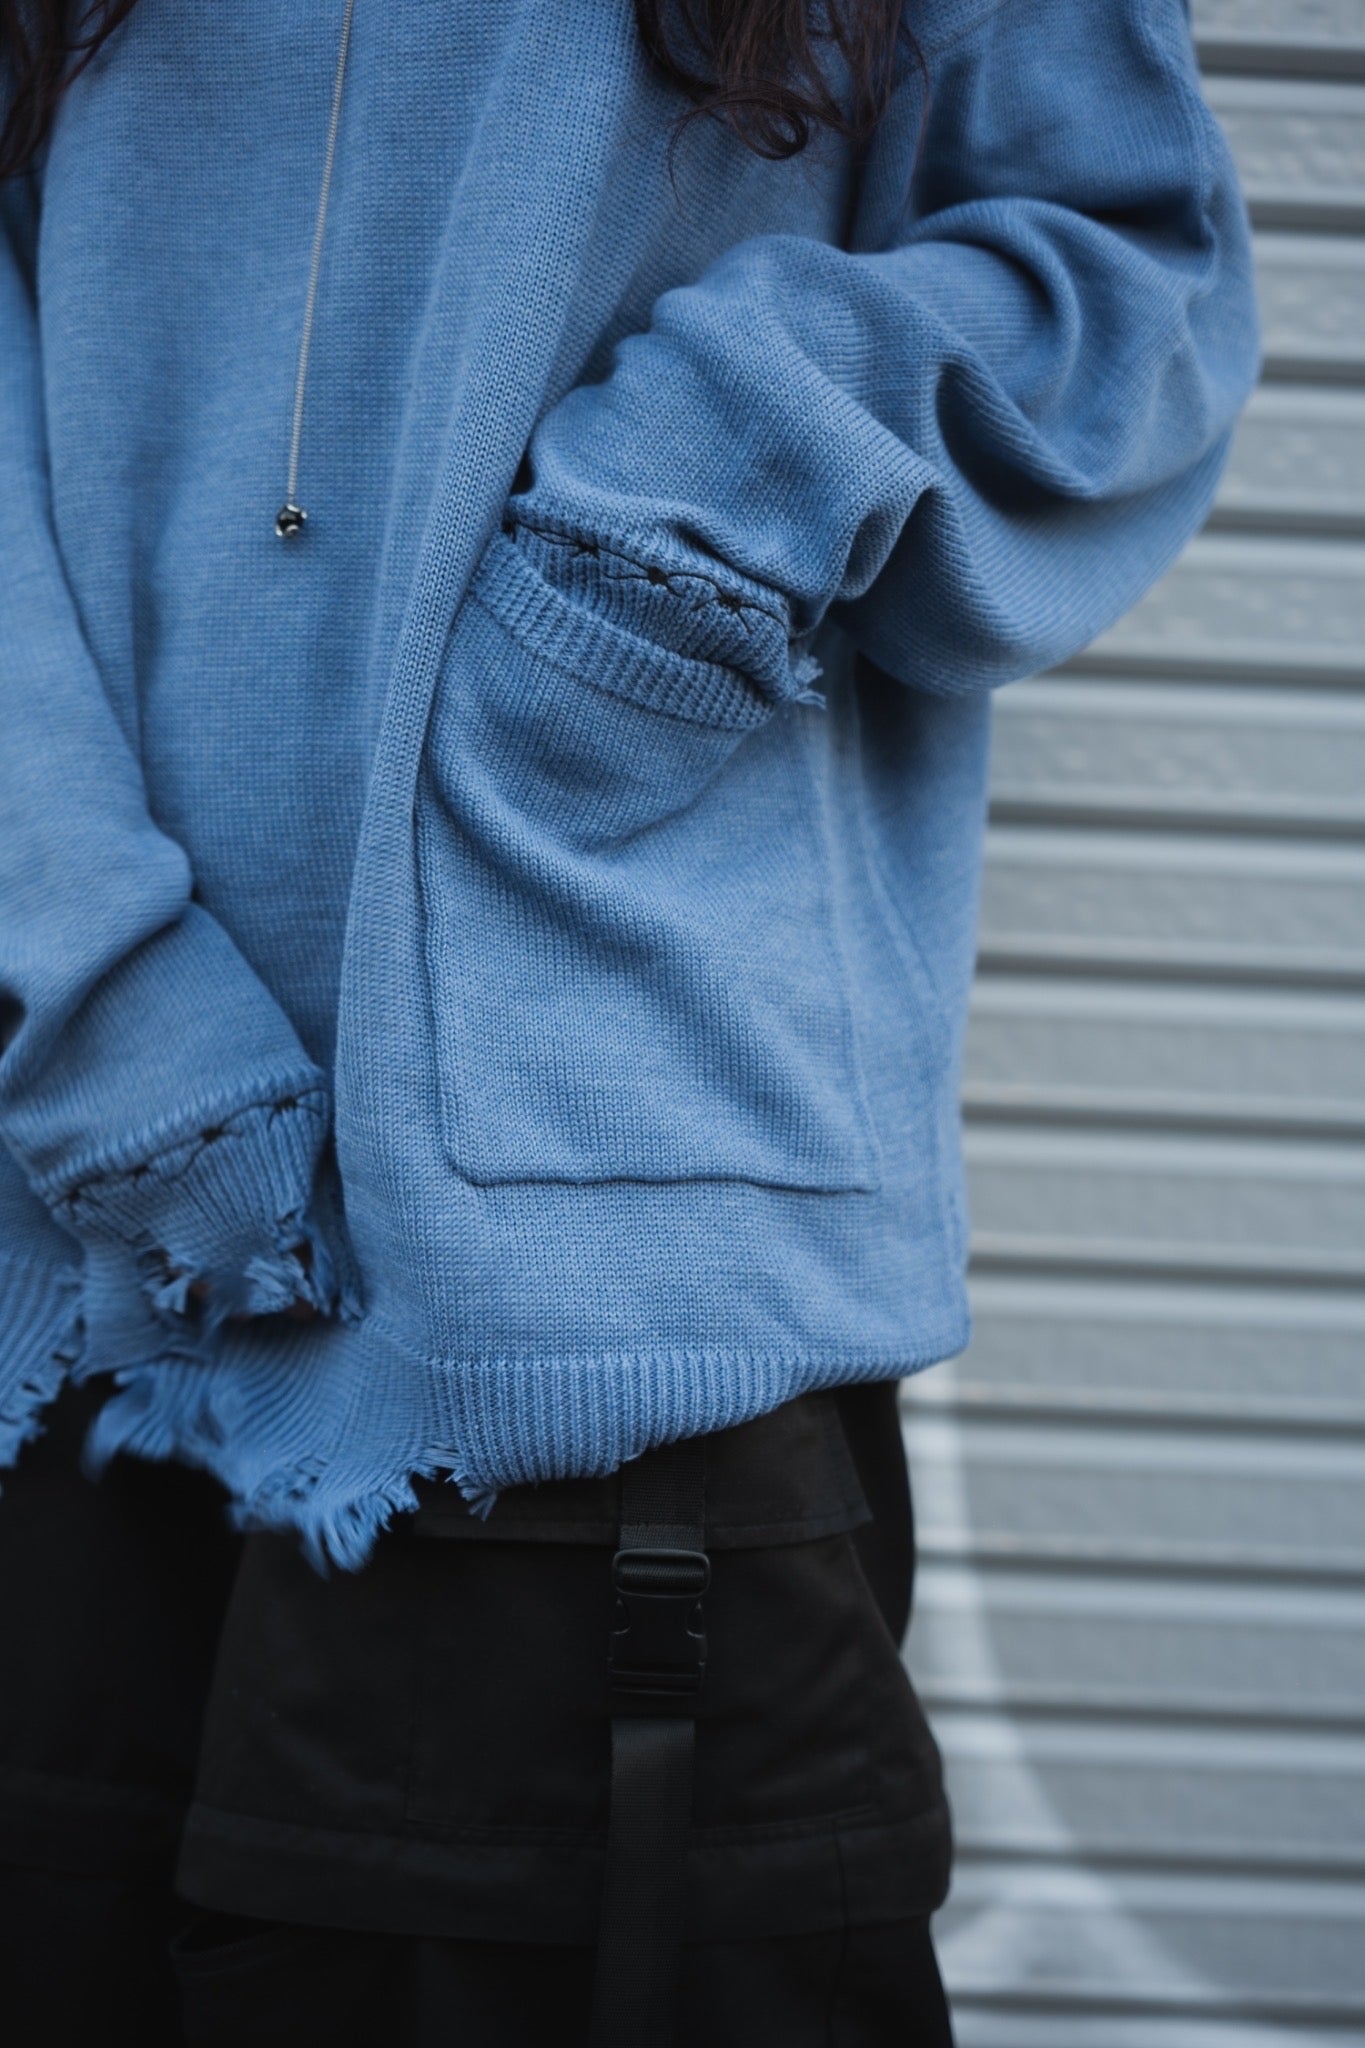 gibous×lhp pocket damage knit aqua blue